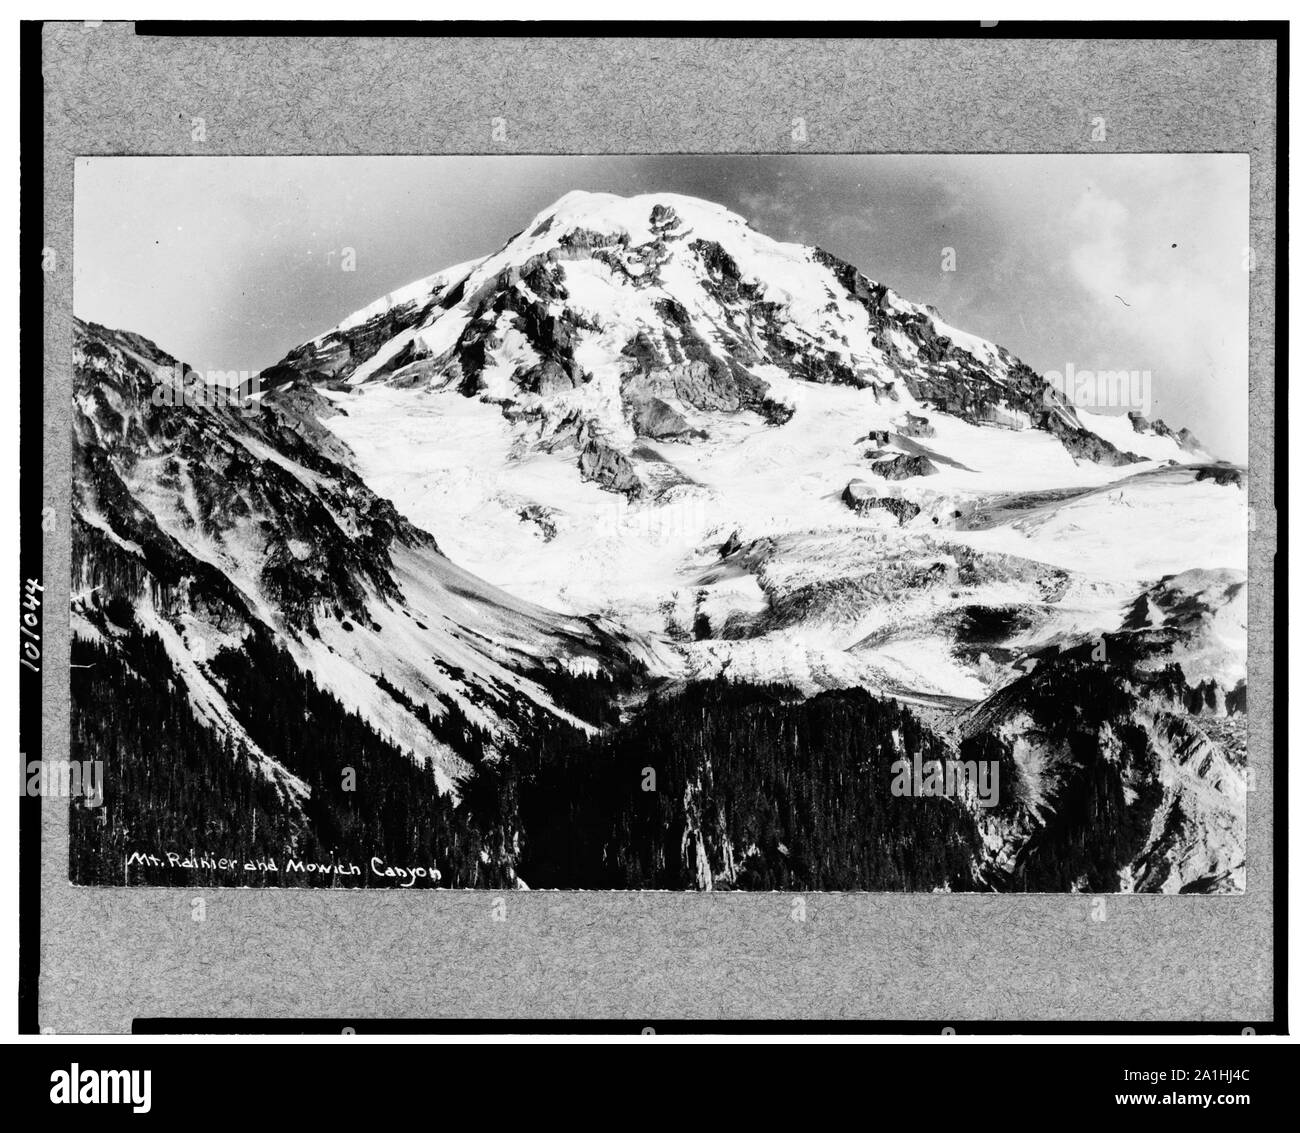 Mt. Rainier e Mowich Canyon Foto Stock